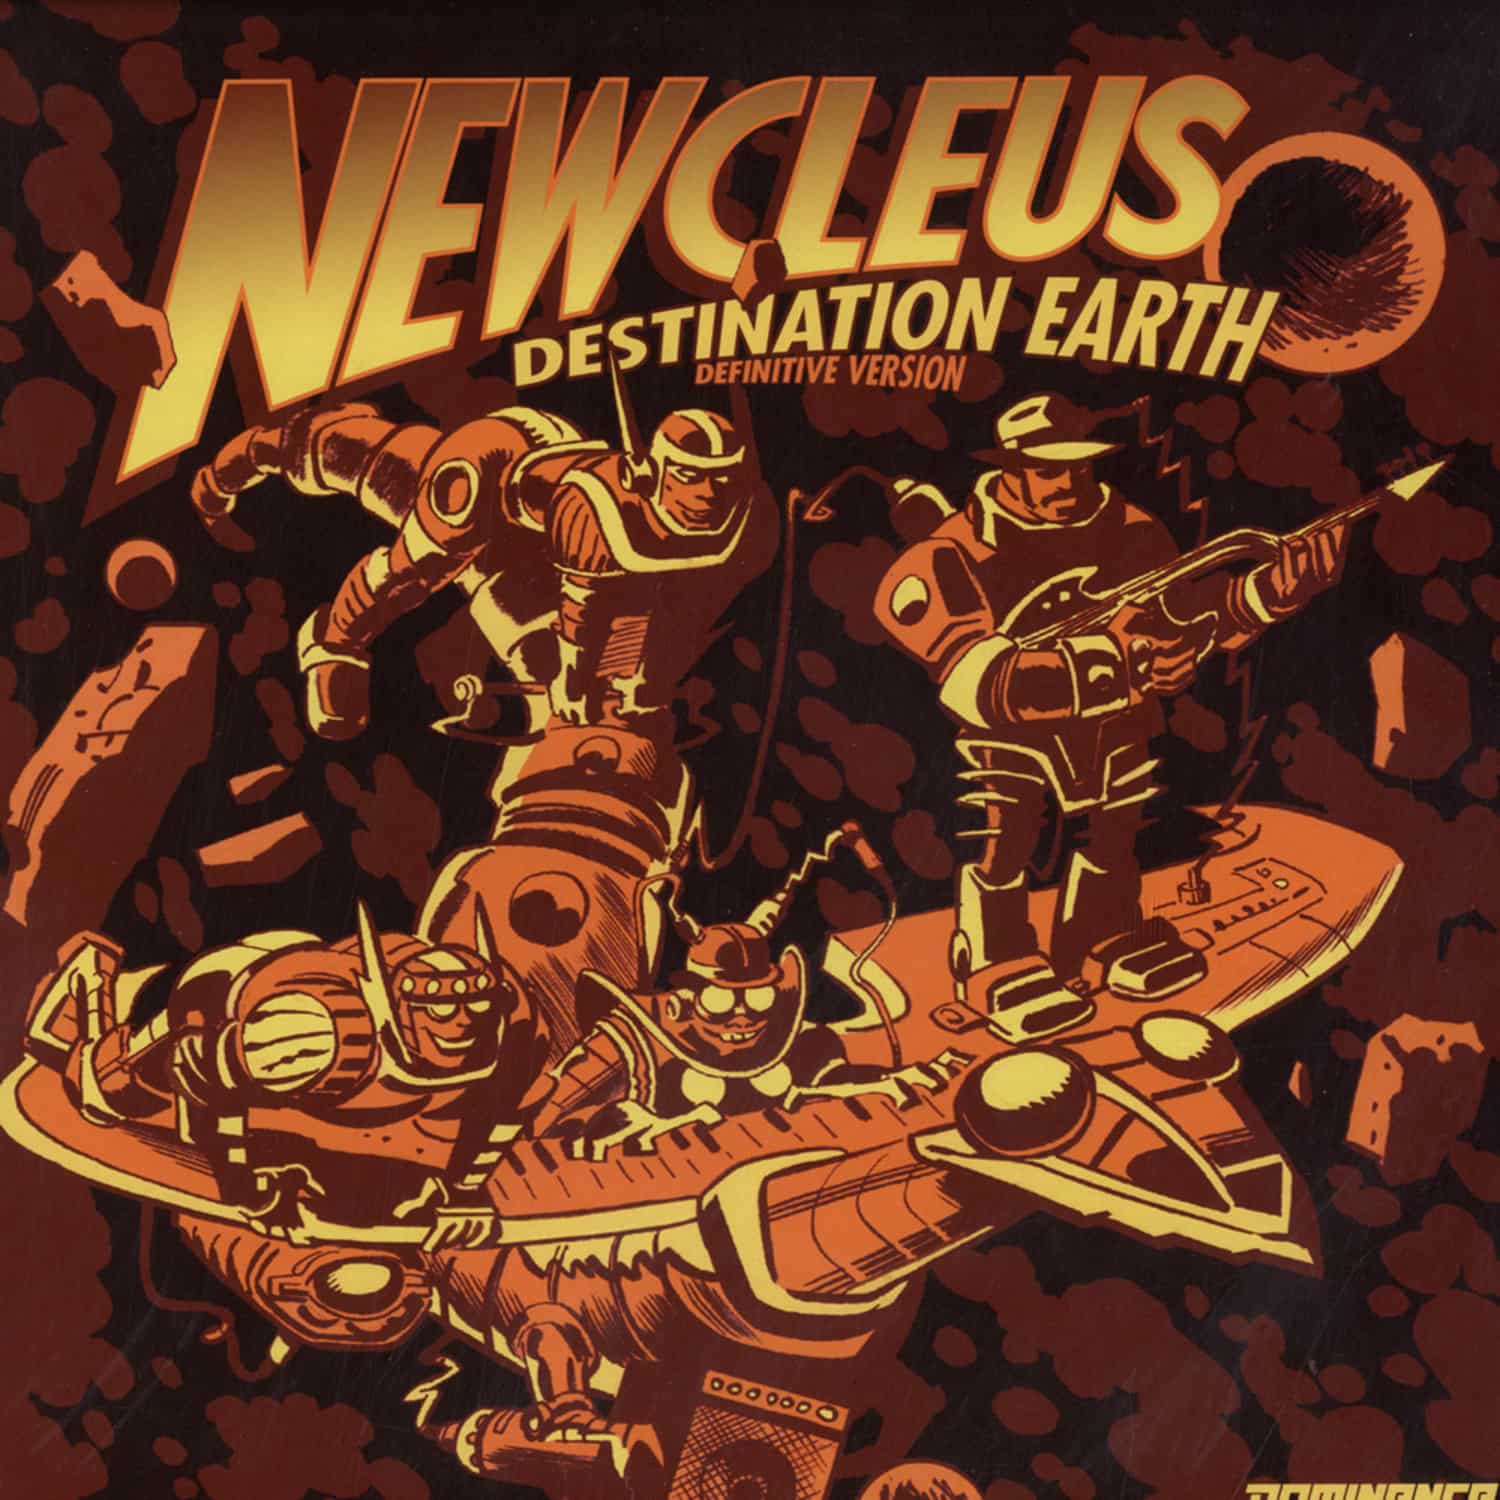 Newcleus vs Sbassship - DESTINATION EARTH